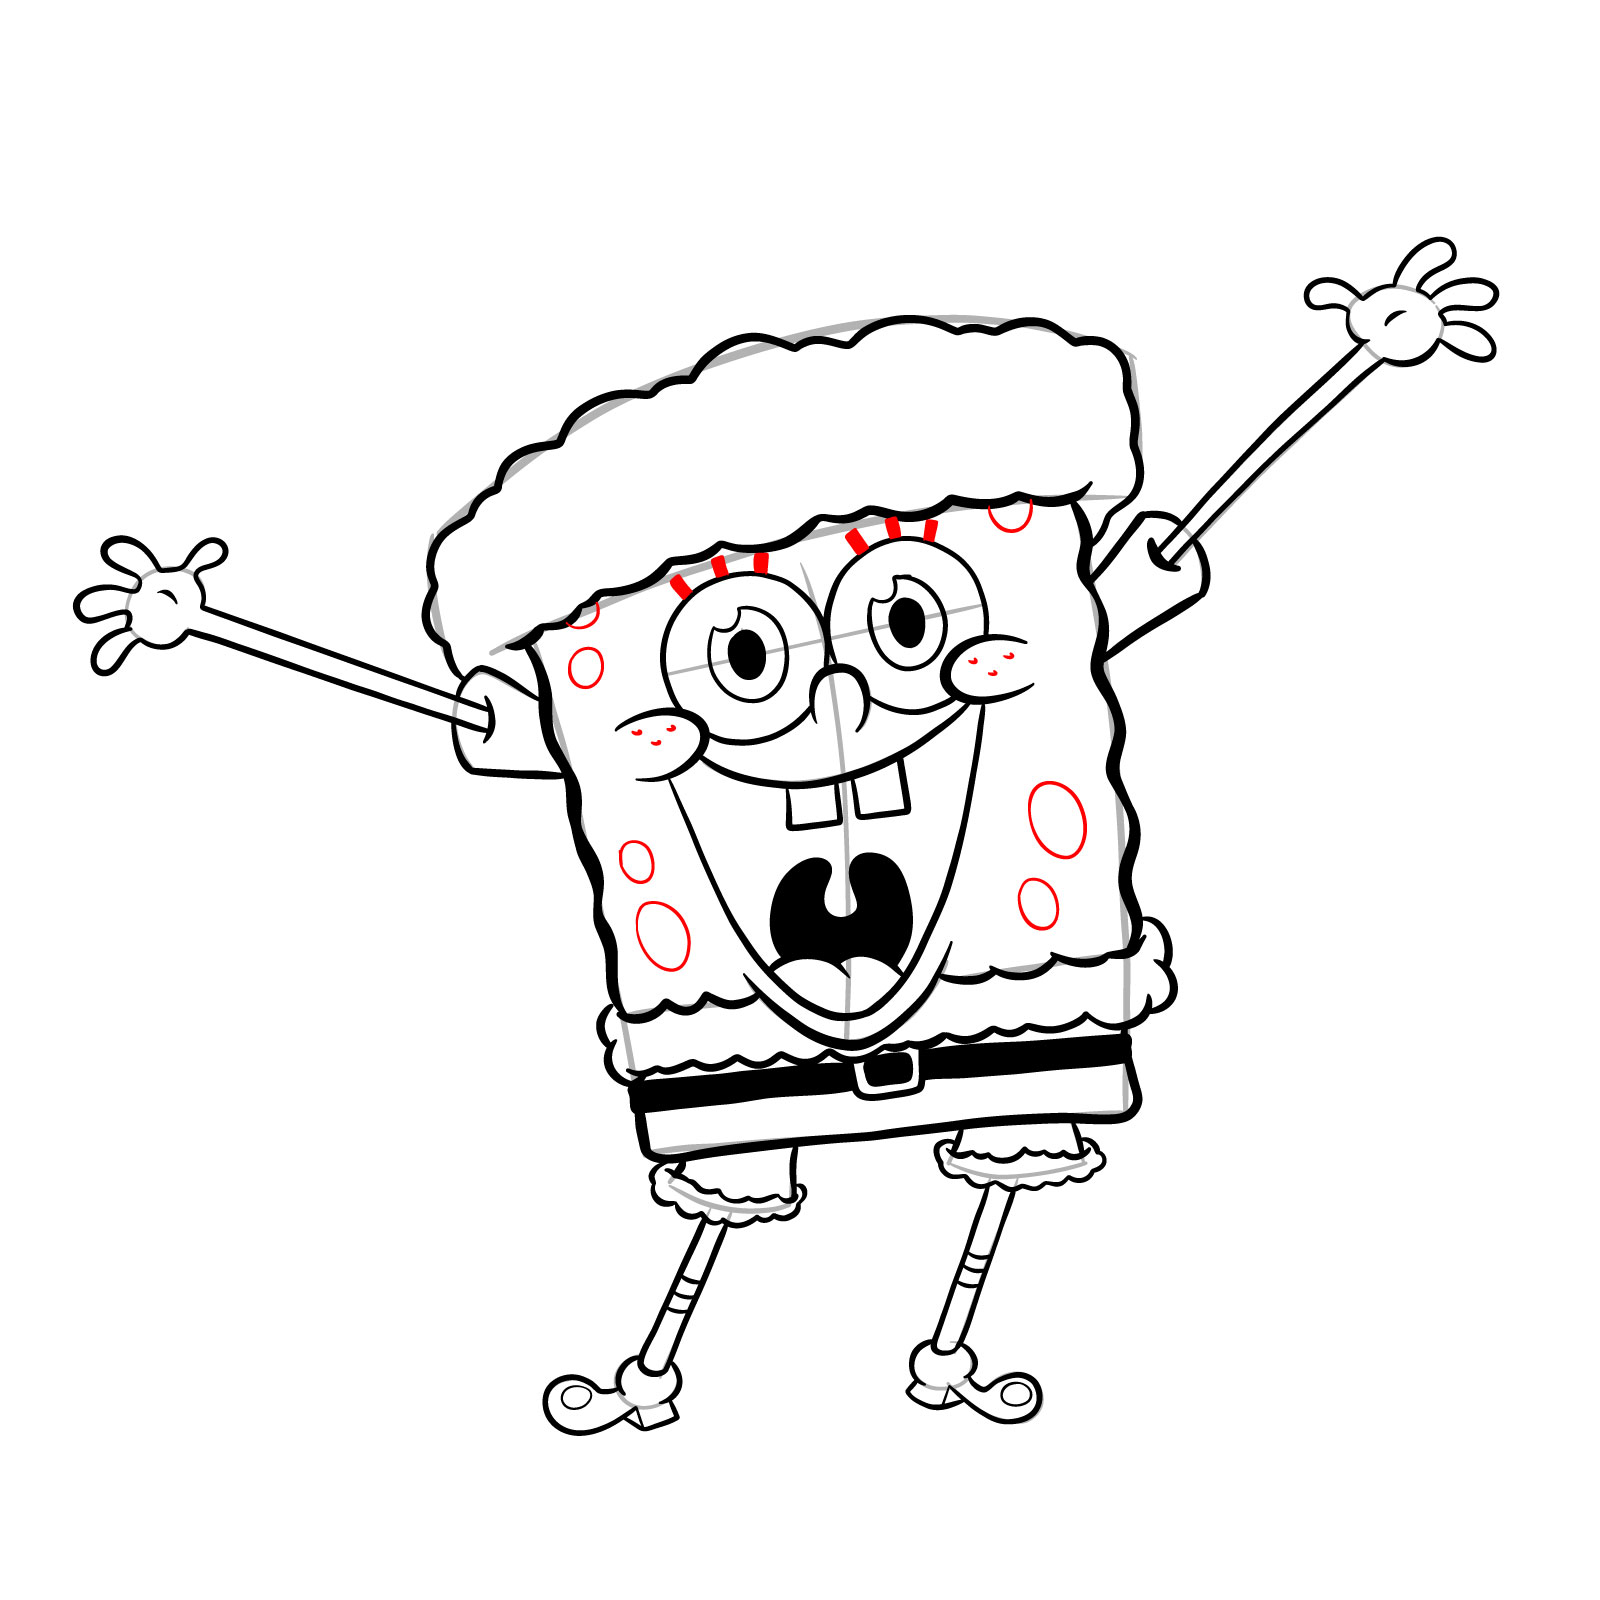 How to draw Santa SpongeBob SquarePants - step 24